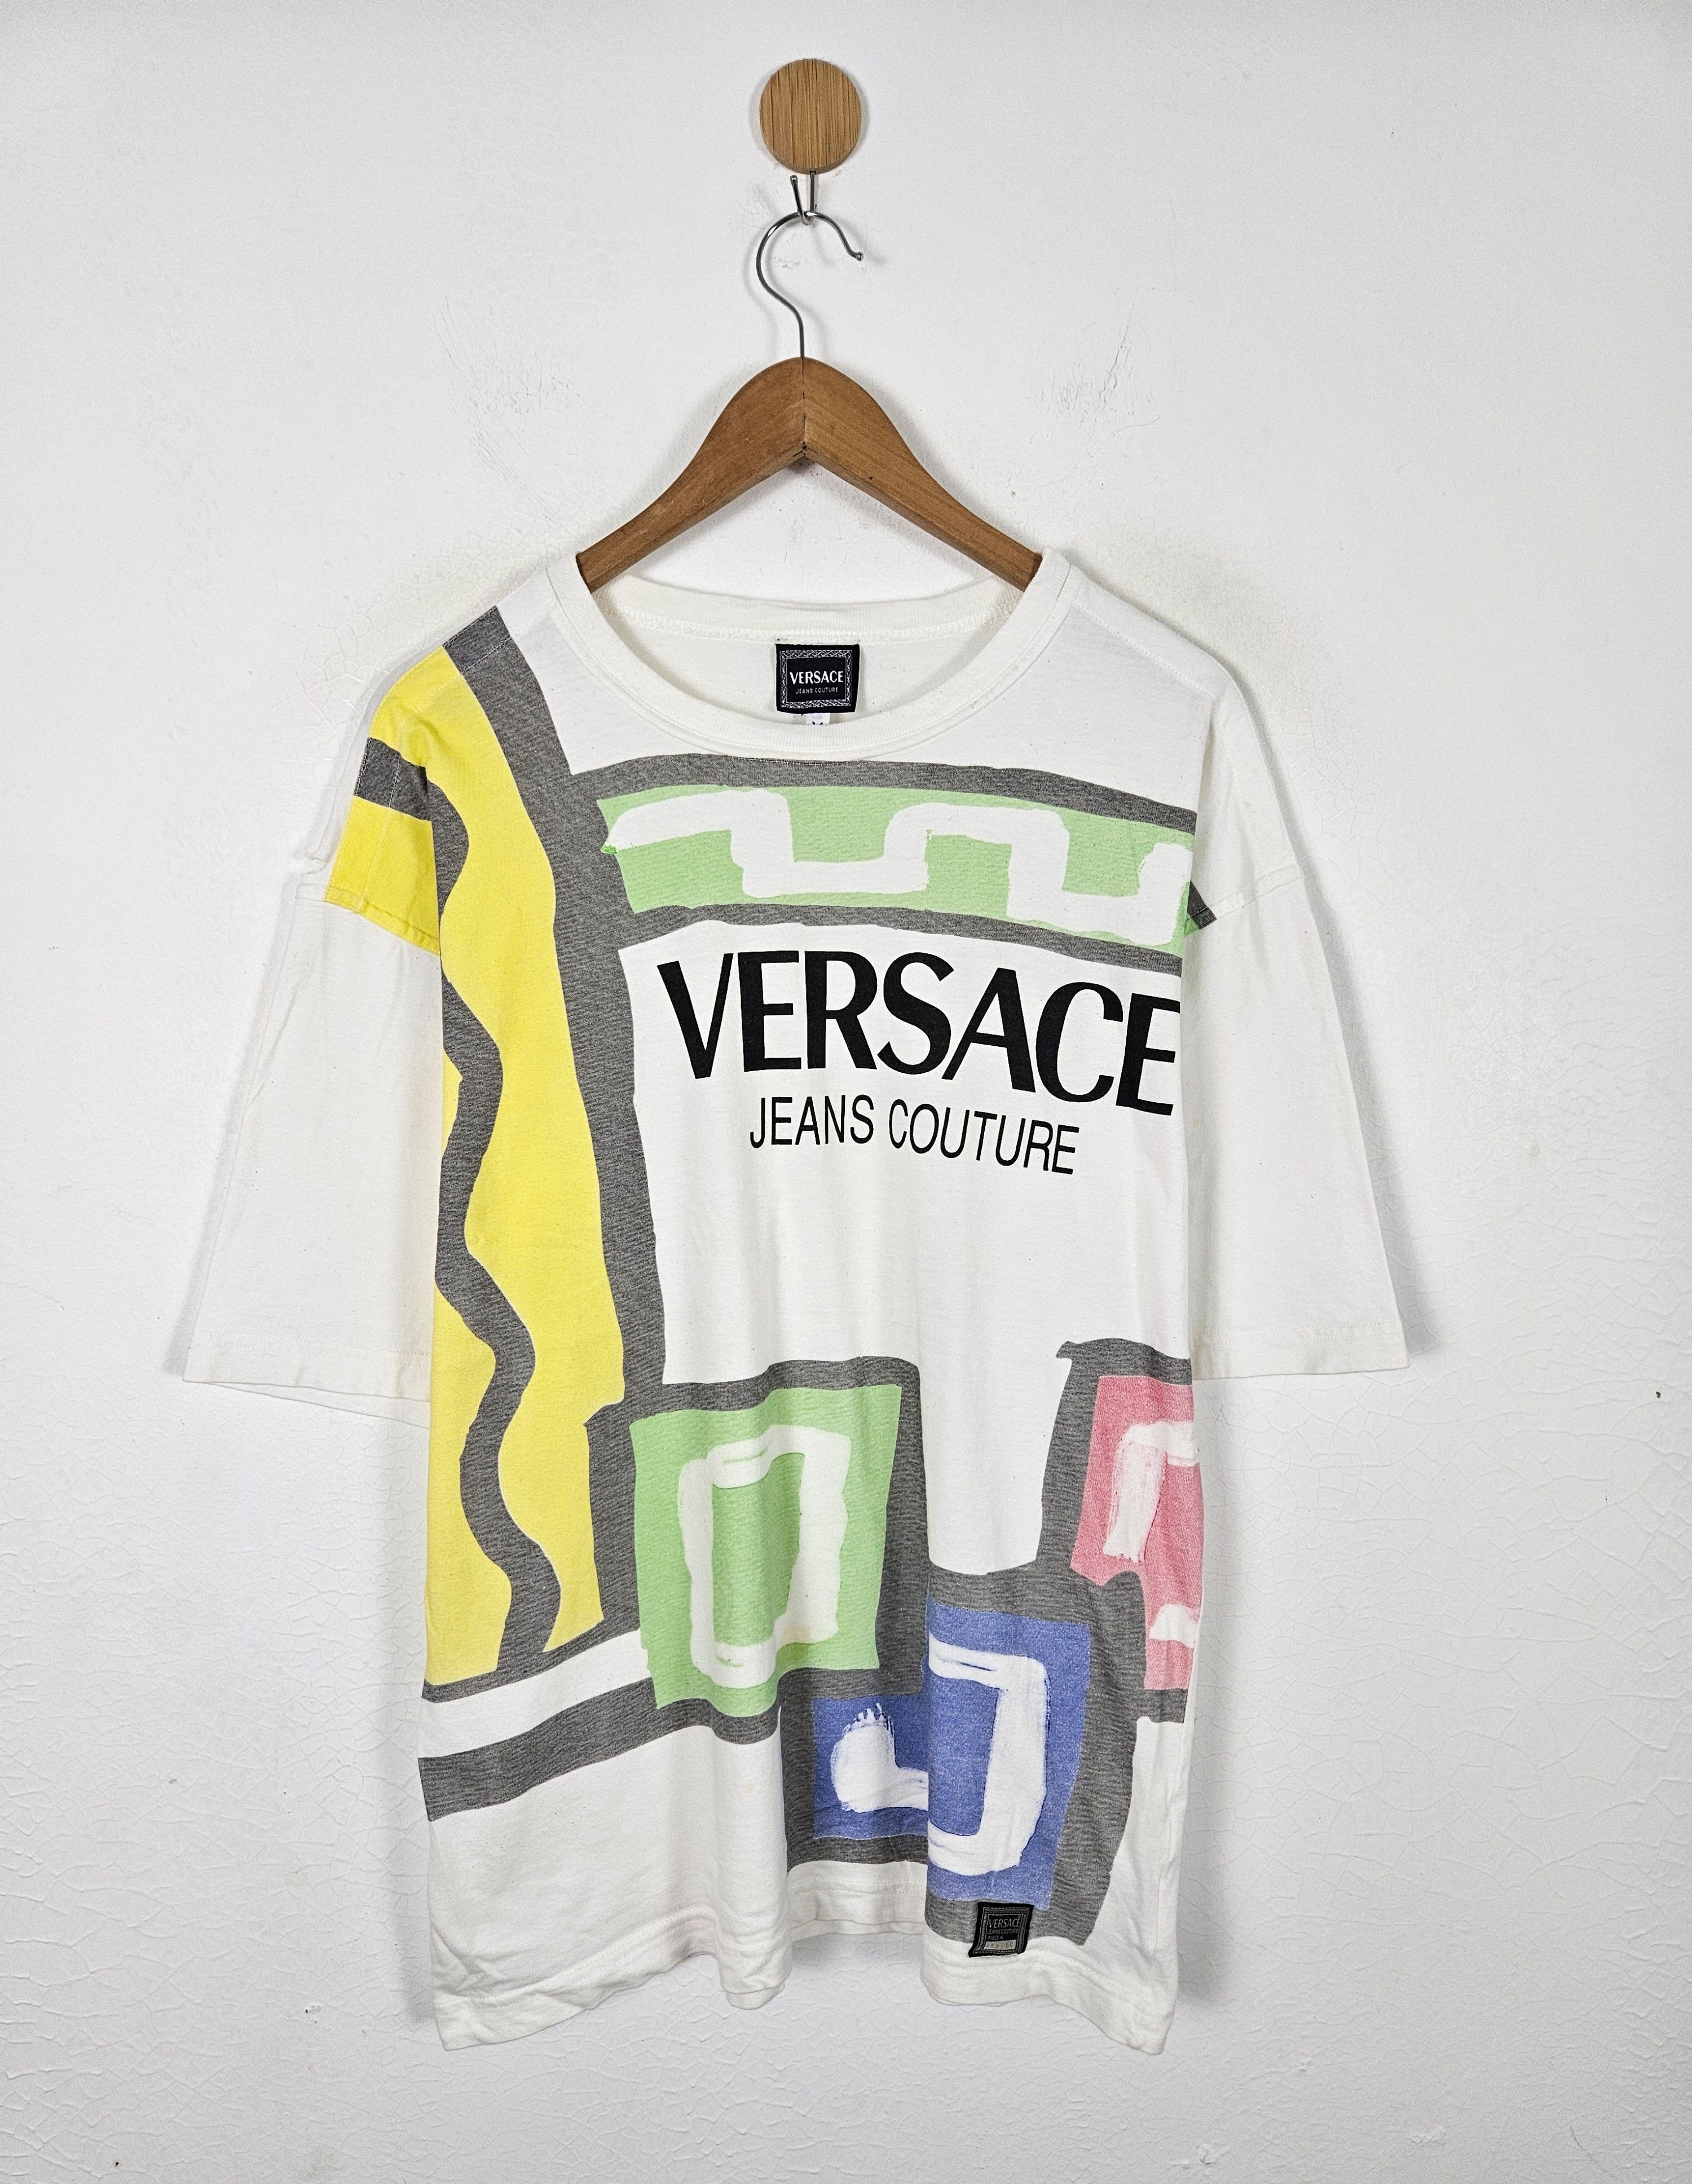 Versace Jeans Couture medusa pop art 90s italy shirt - 1